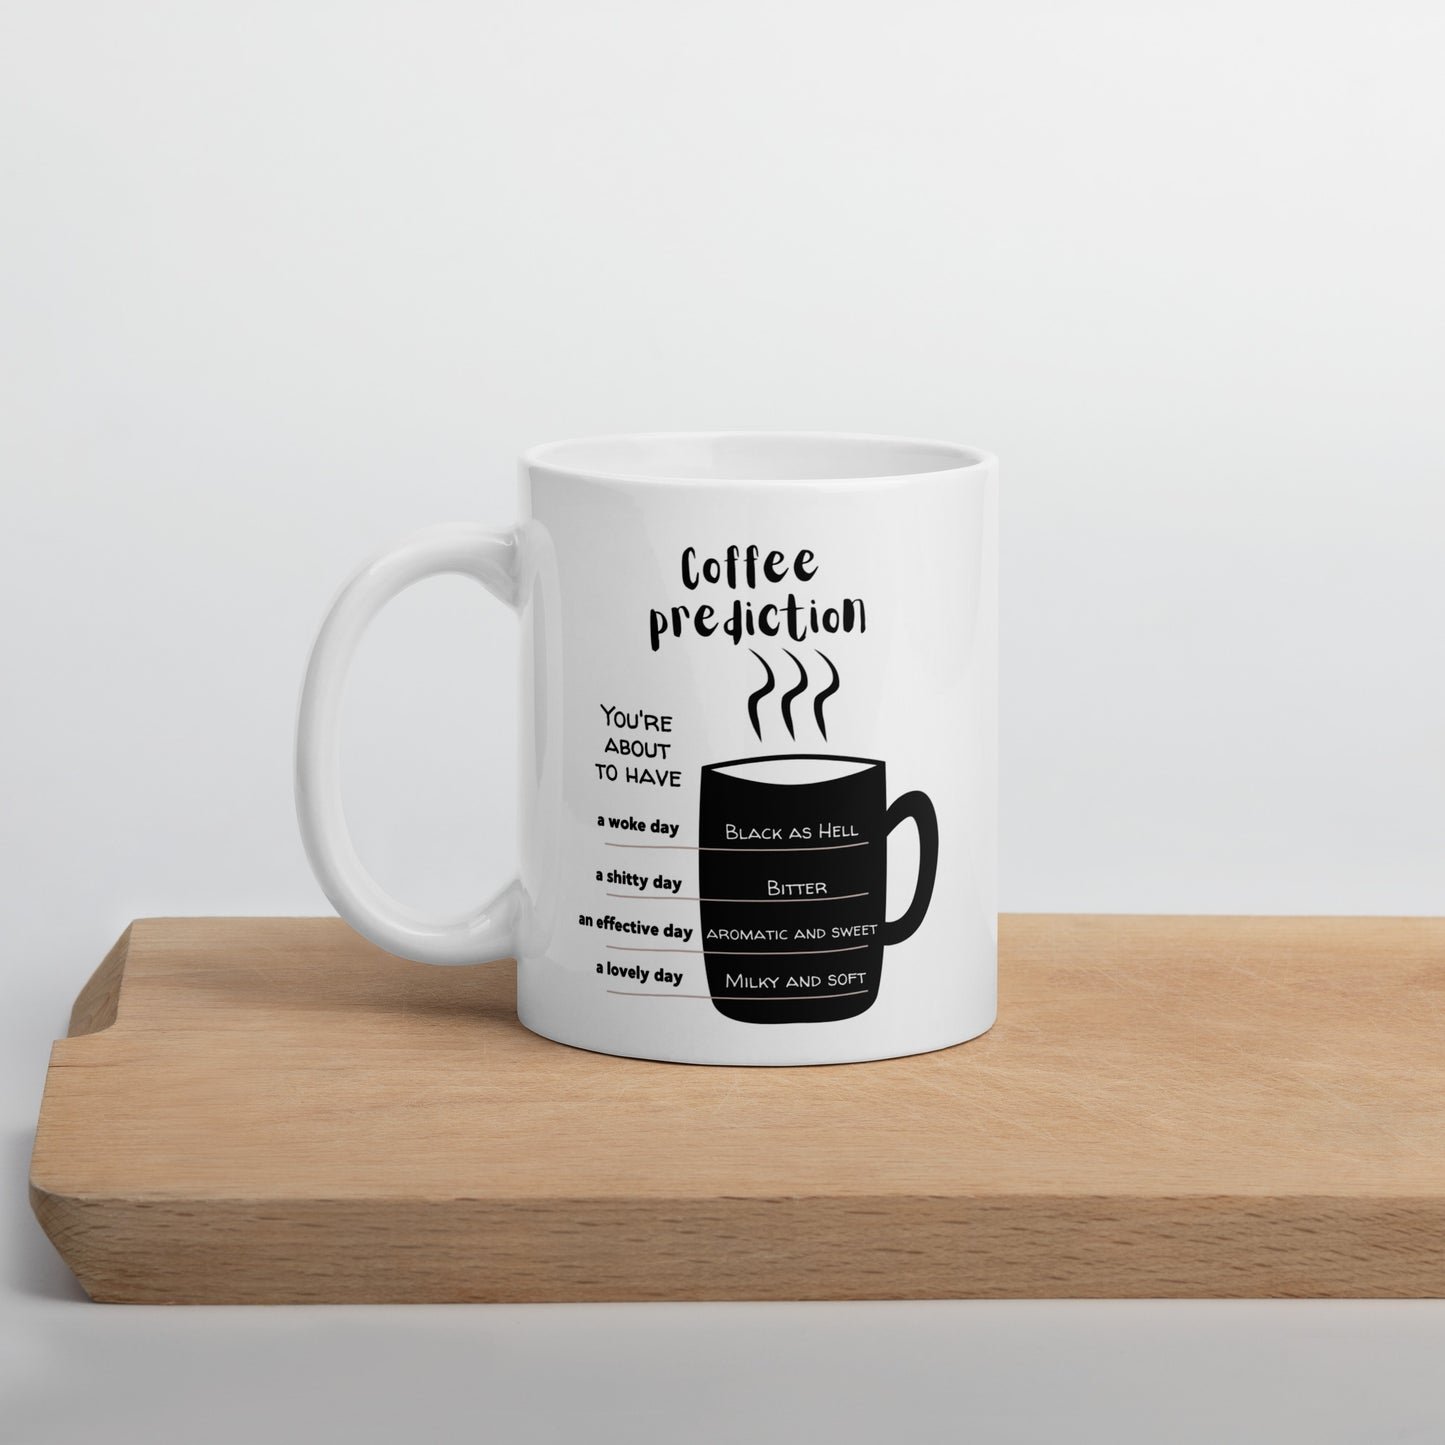 Coffee predictions, mug